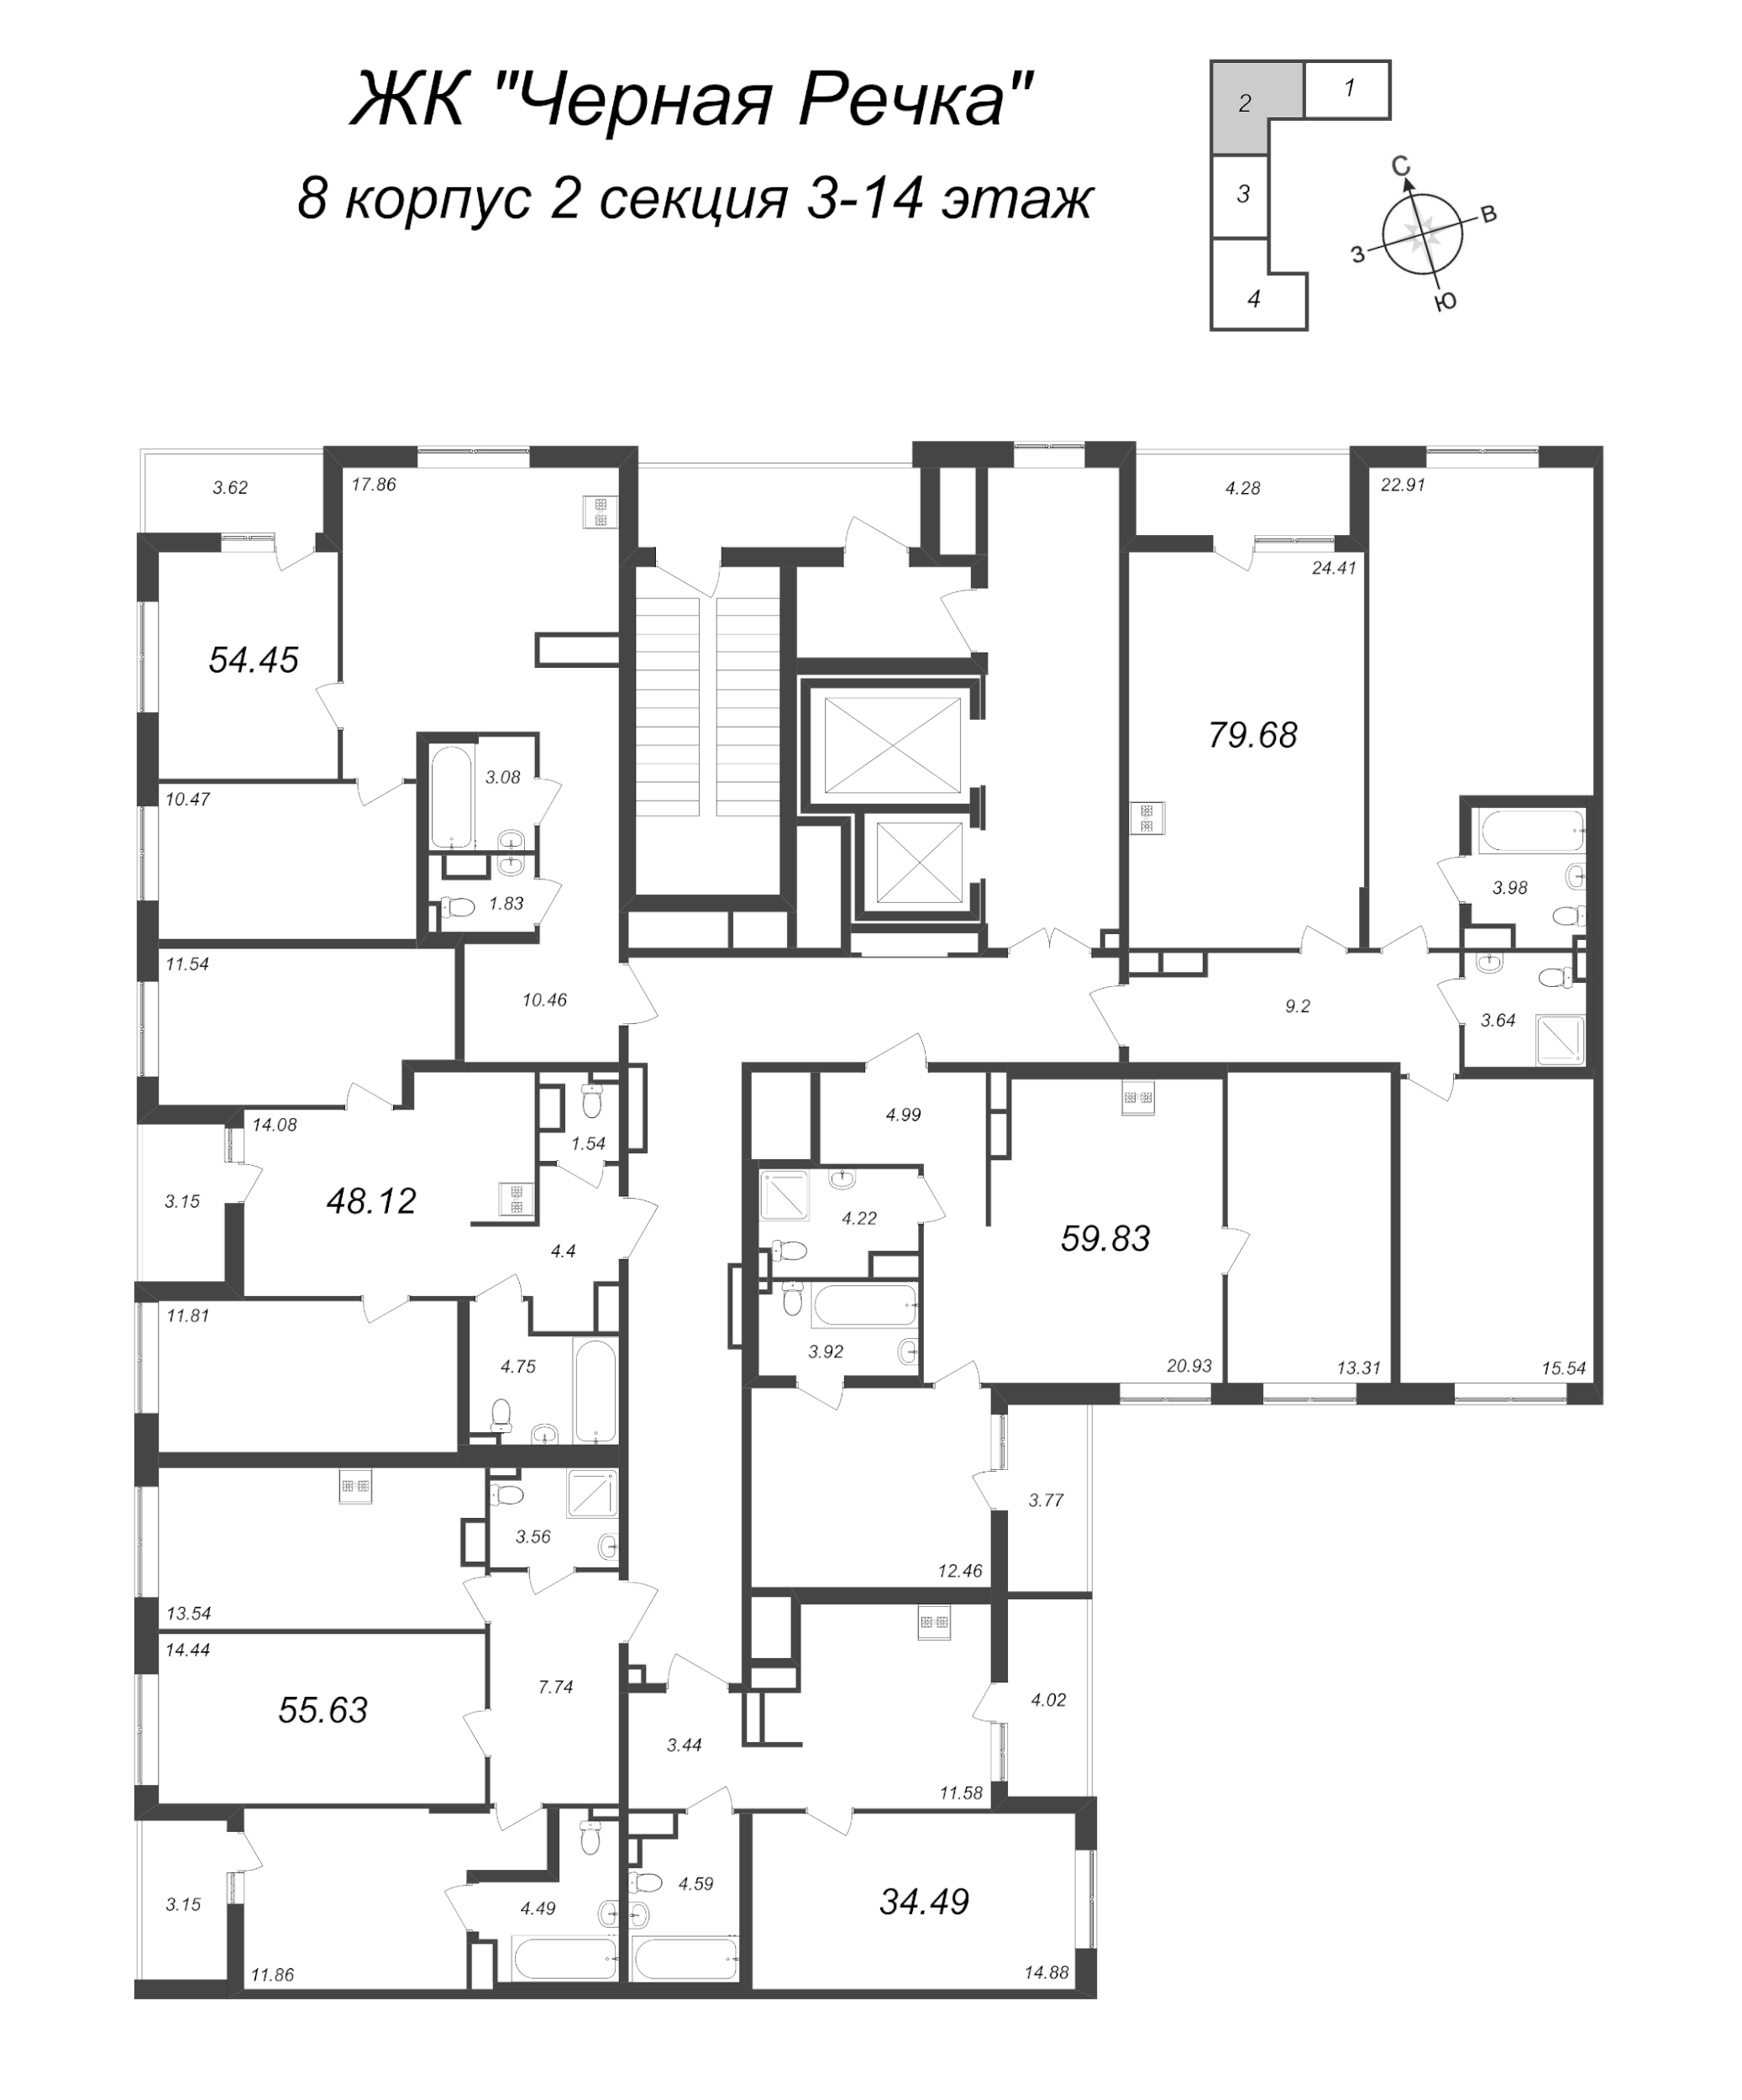 3-комнатная (Евро) квартира, 54.45 м² - планировка этажа